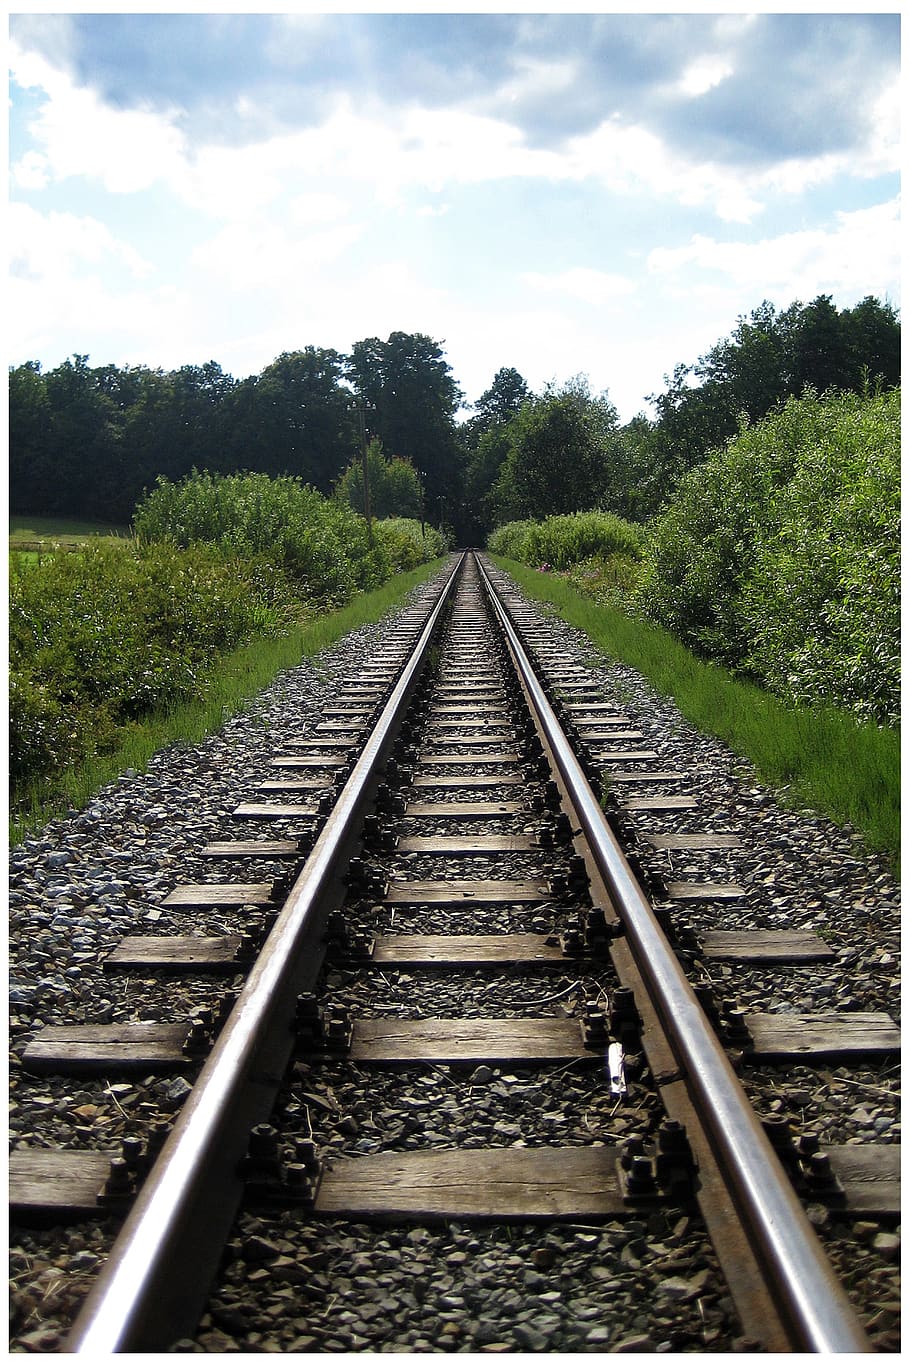 gleise, train, railway, rails, transport, railroad tracks, away, sky, track, travel